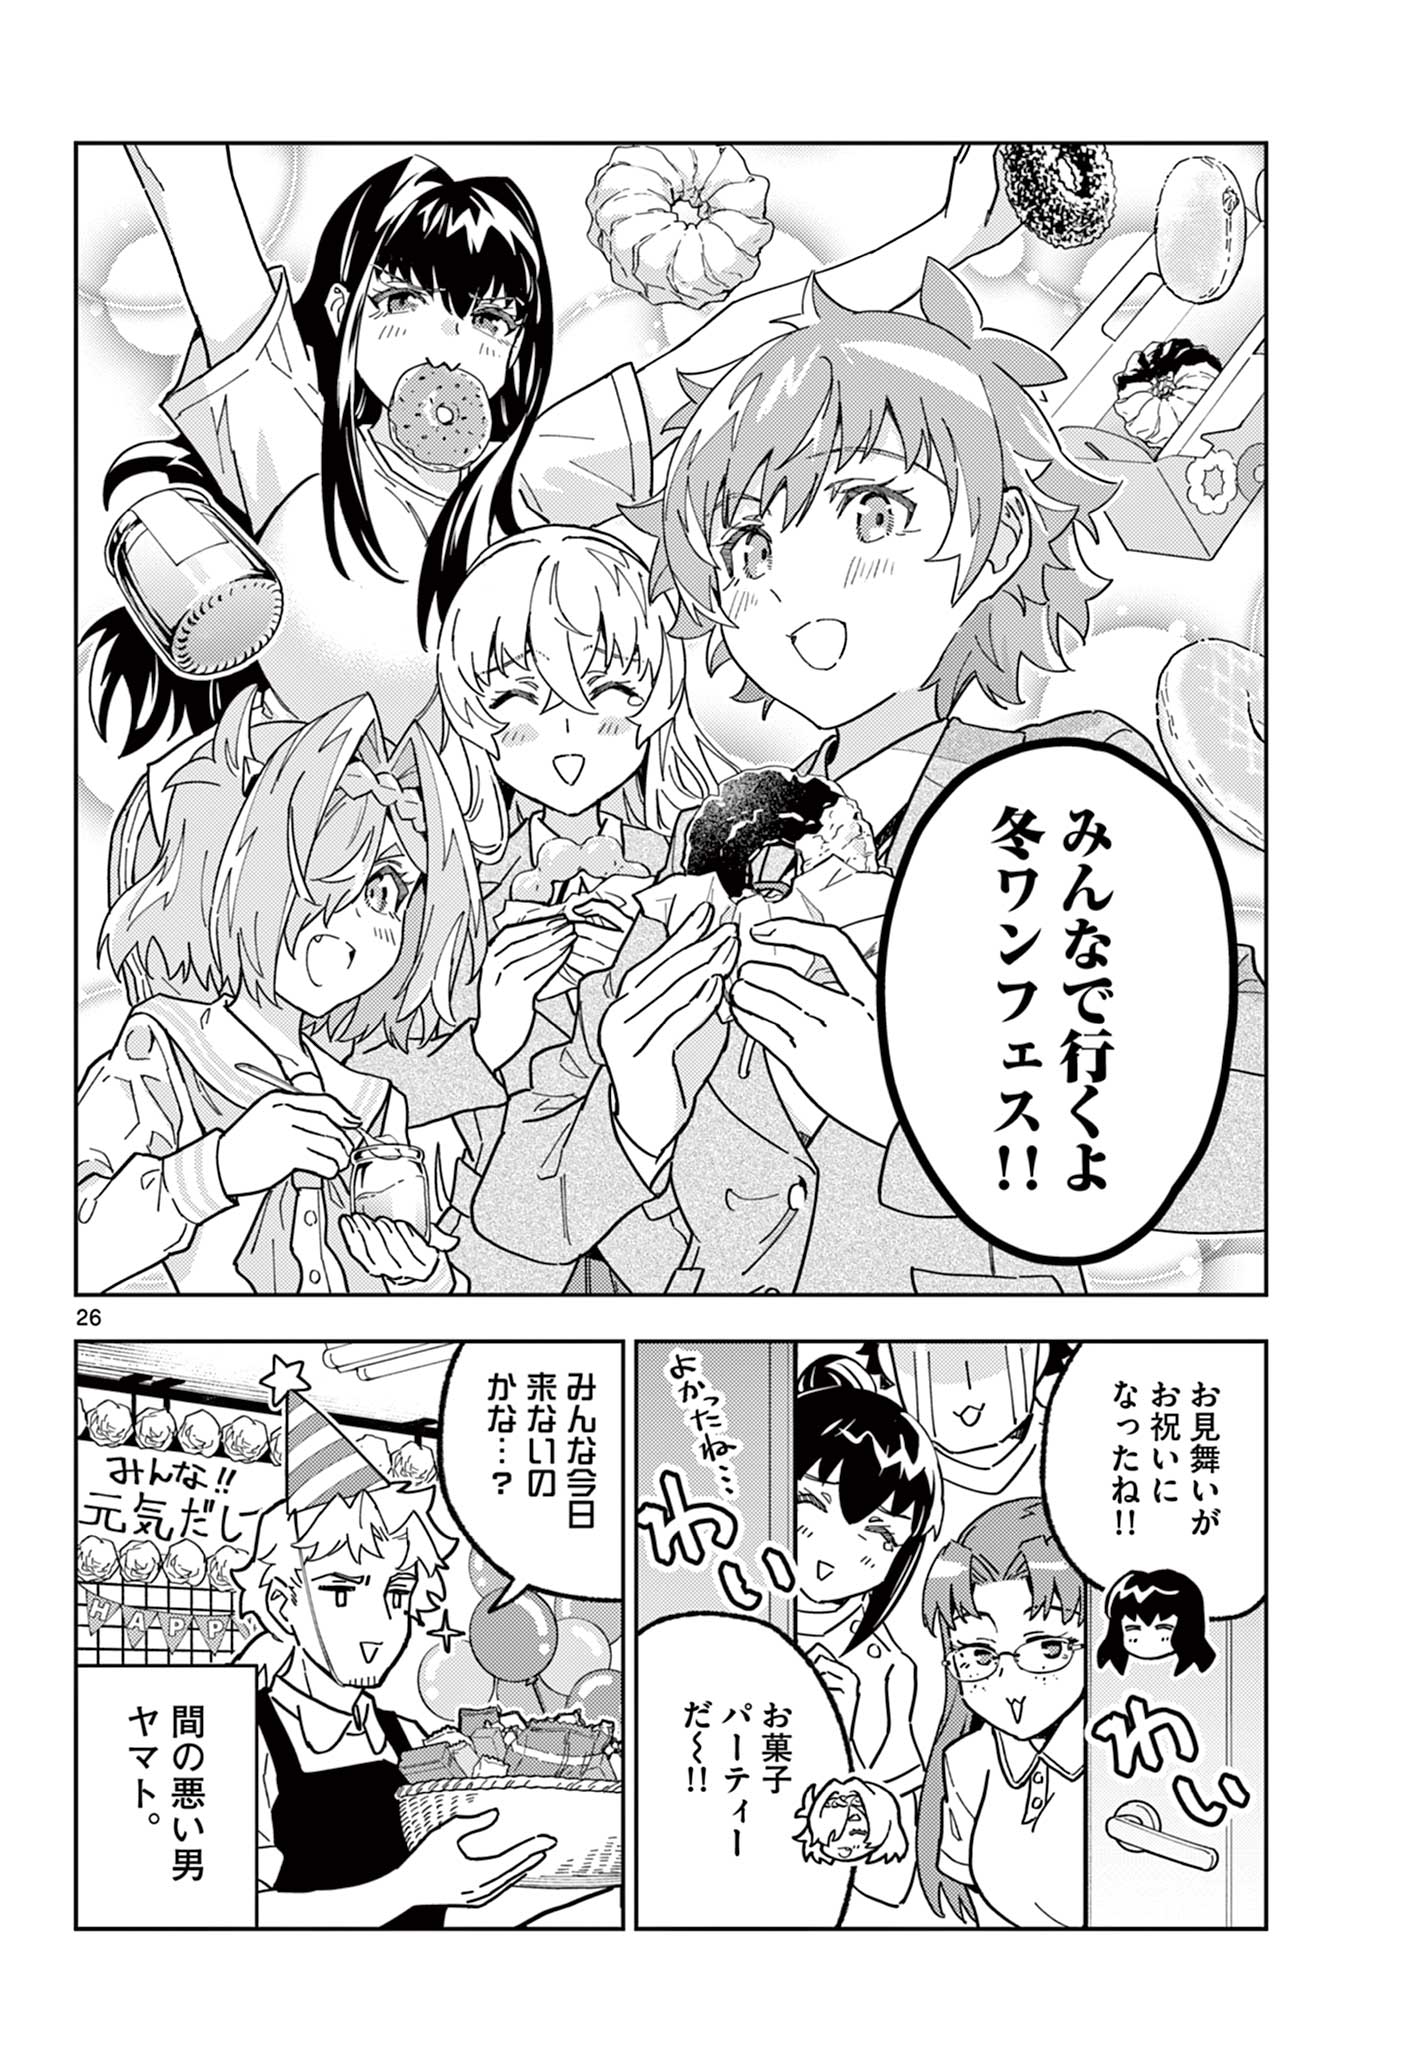 Gareki! Modeller Girls no Houkago - Chapter 21 - Page 26